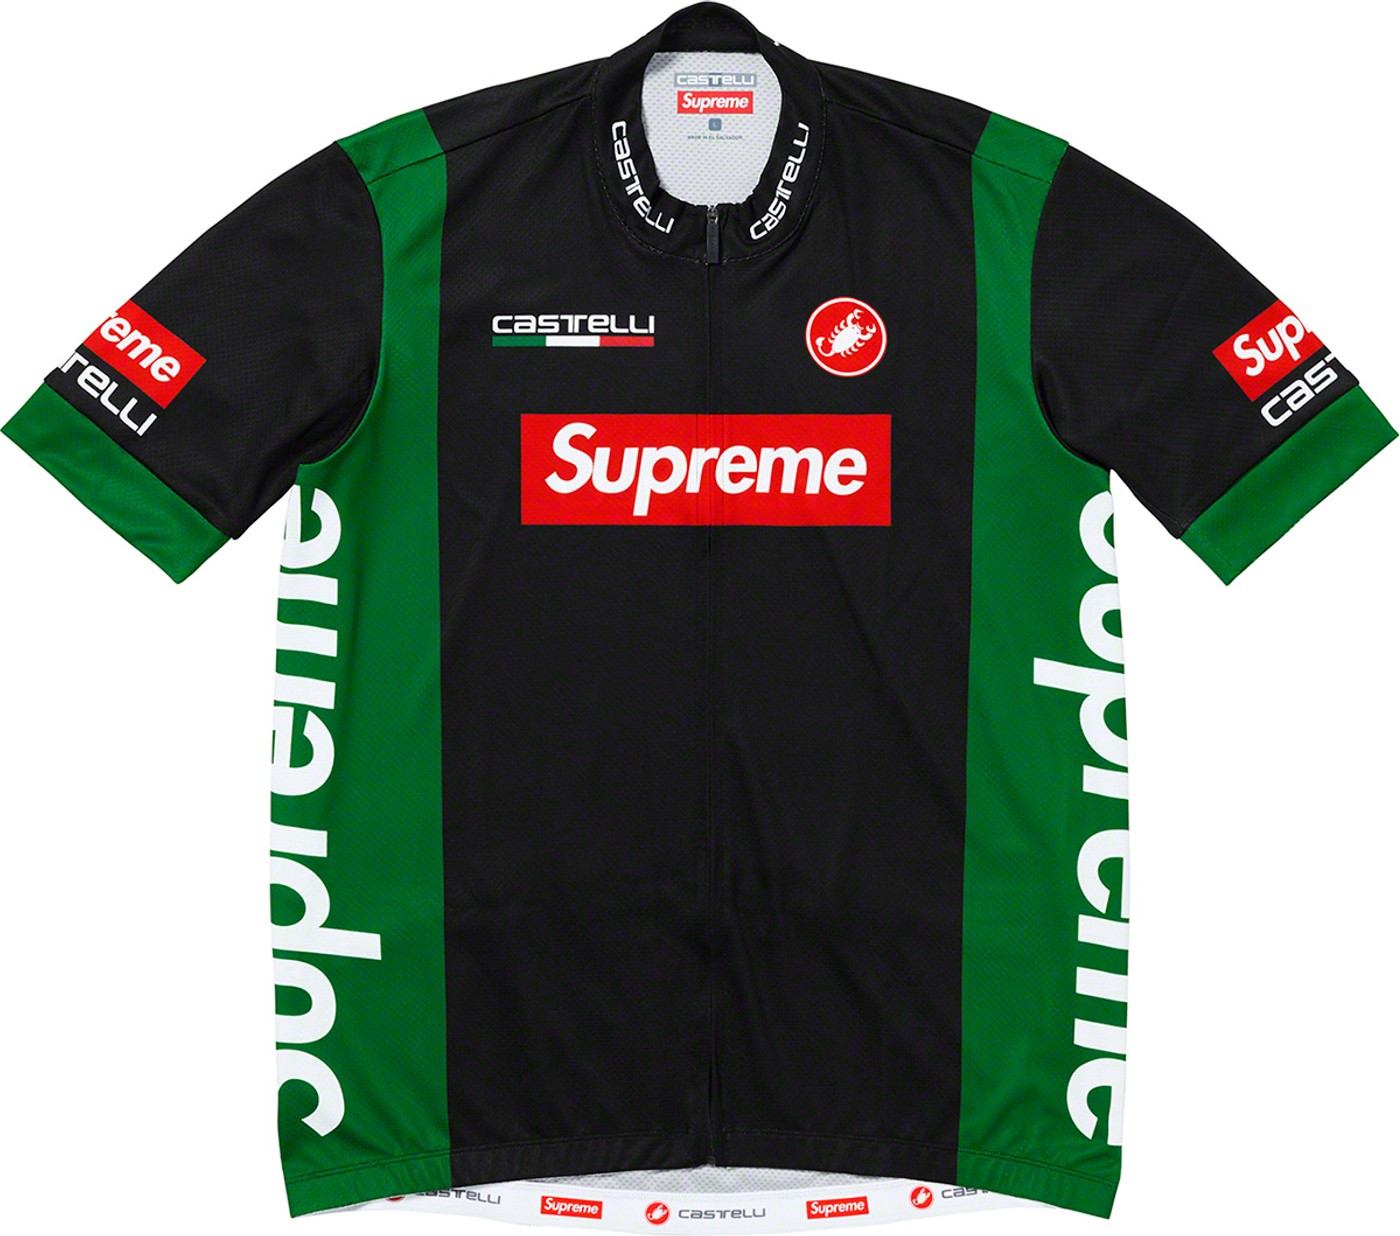 Supreme®/Castelli Cycling Bib Short - Spring/Summer 2020 Preview – Supreme